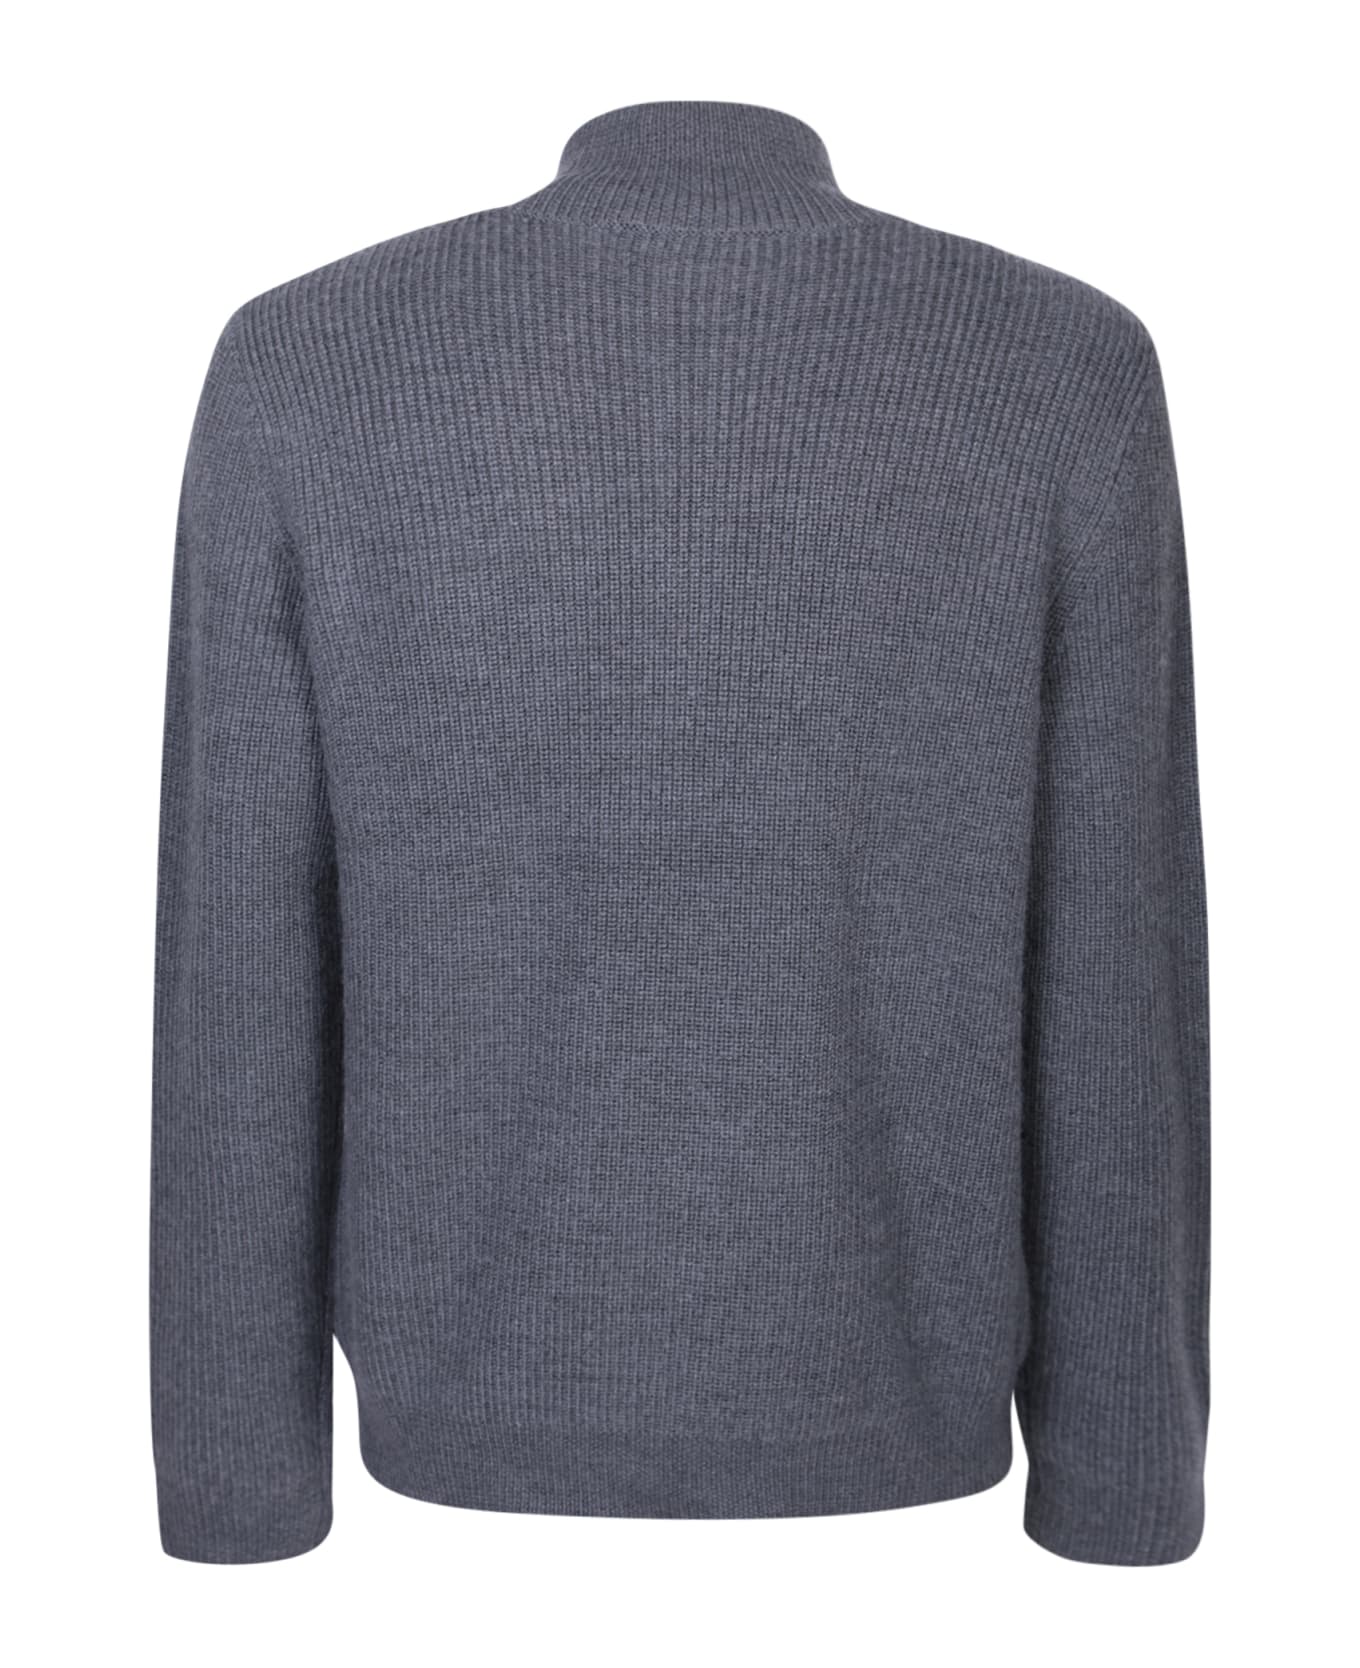 J.W. Anderson Padlock Sweater - Charcoal Melange